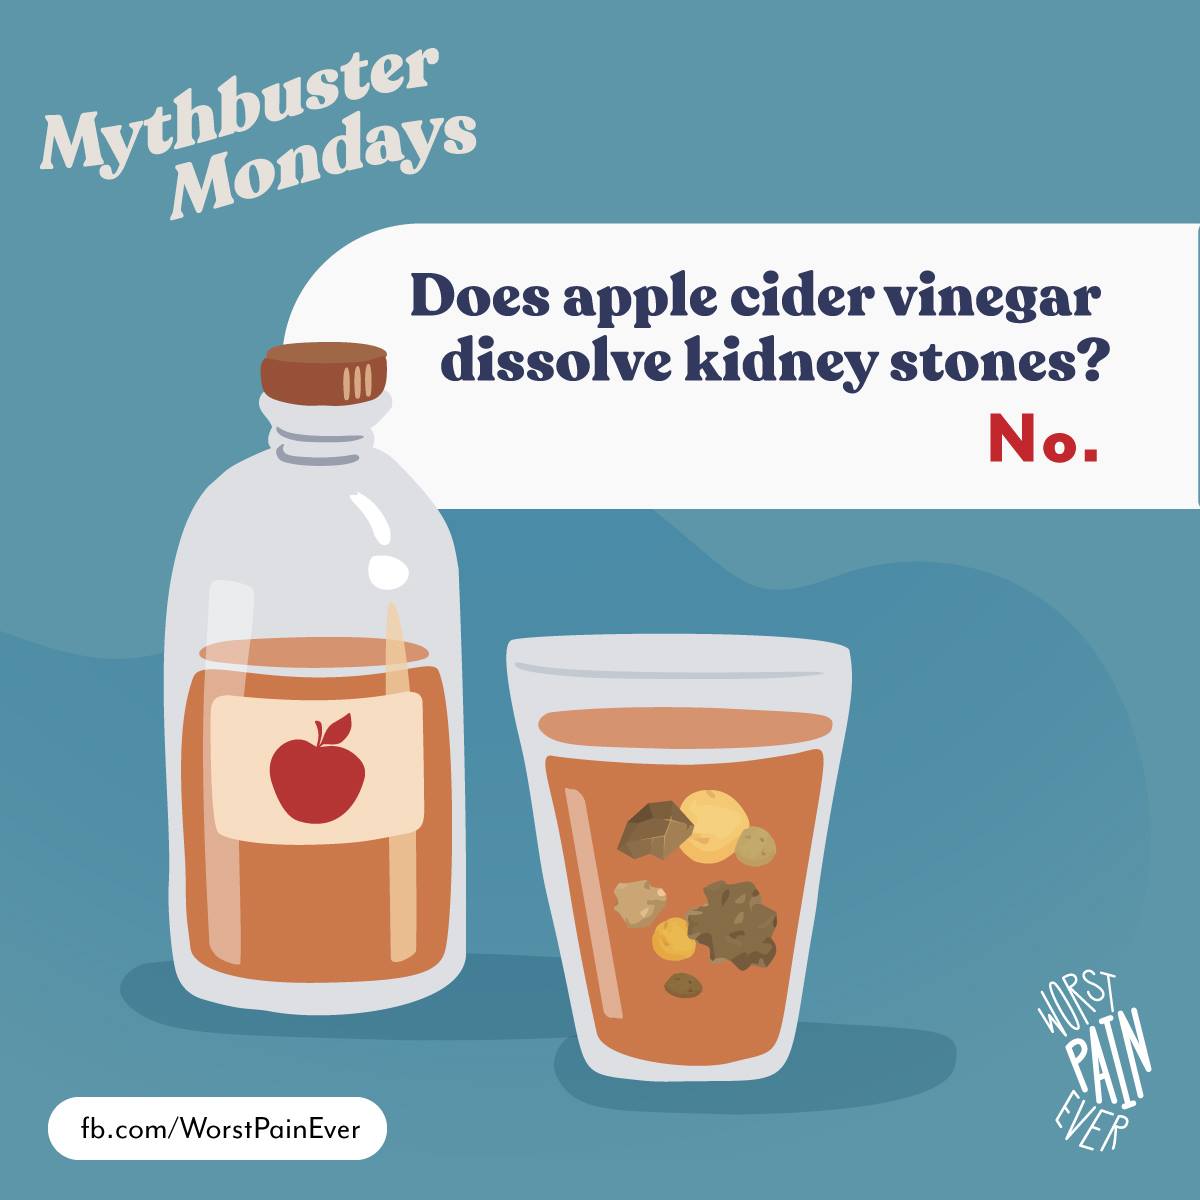 Does apple cider vinegar dissolve kidney stones?